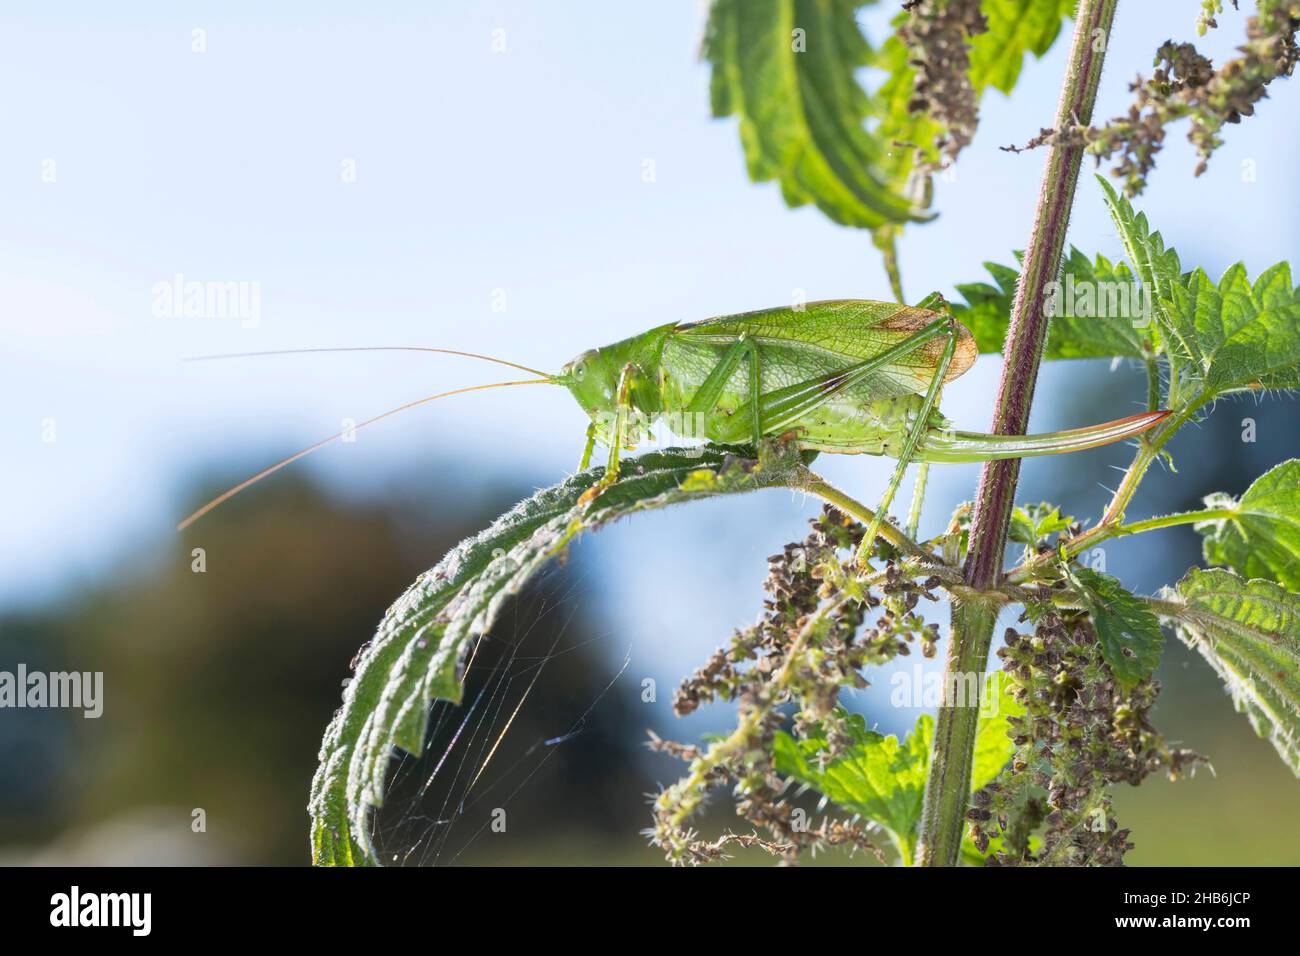 Cricket vert et vert, cricket vert et vert, cricket vert et vert (Tettigonia cantans), femelle avec ovipositor, Allemagne Banque D'Images